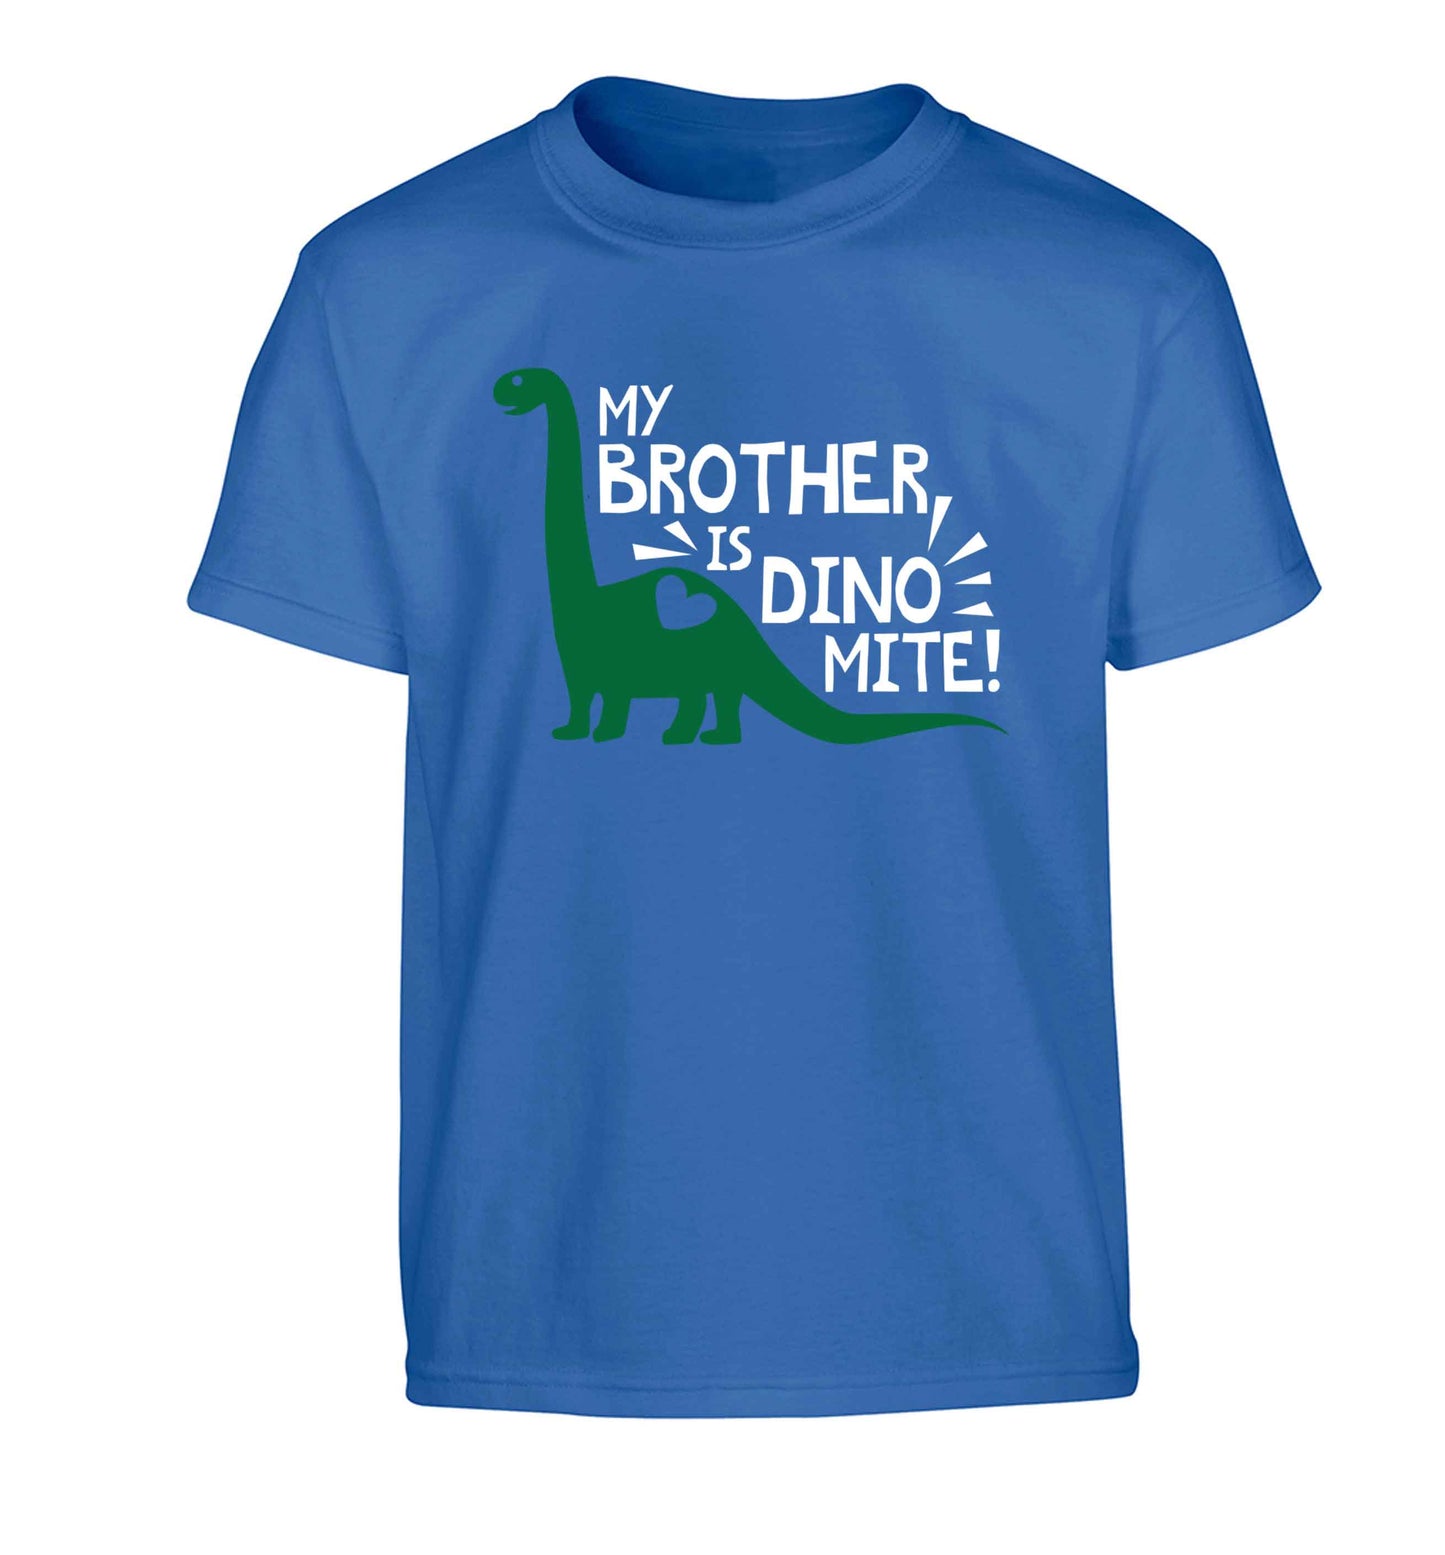 My brother is dinomite! Children's blue Tshirt 12-13 Years